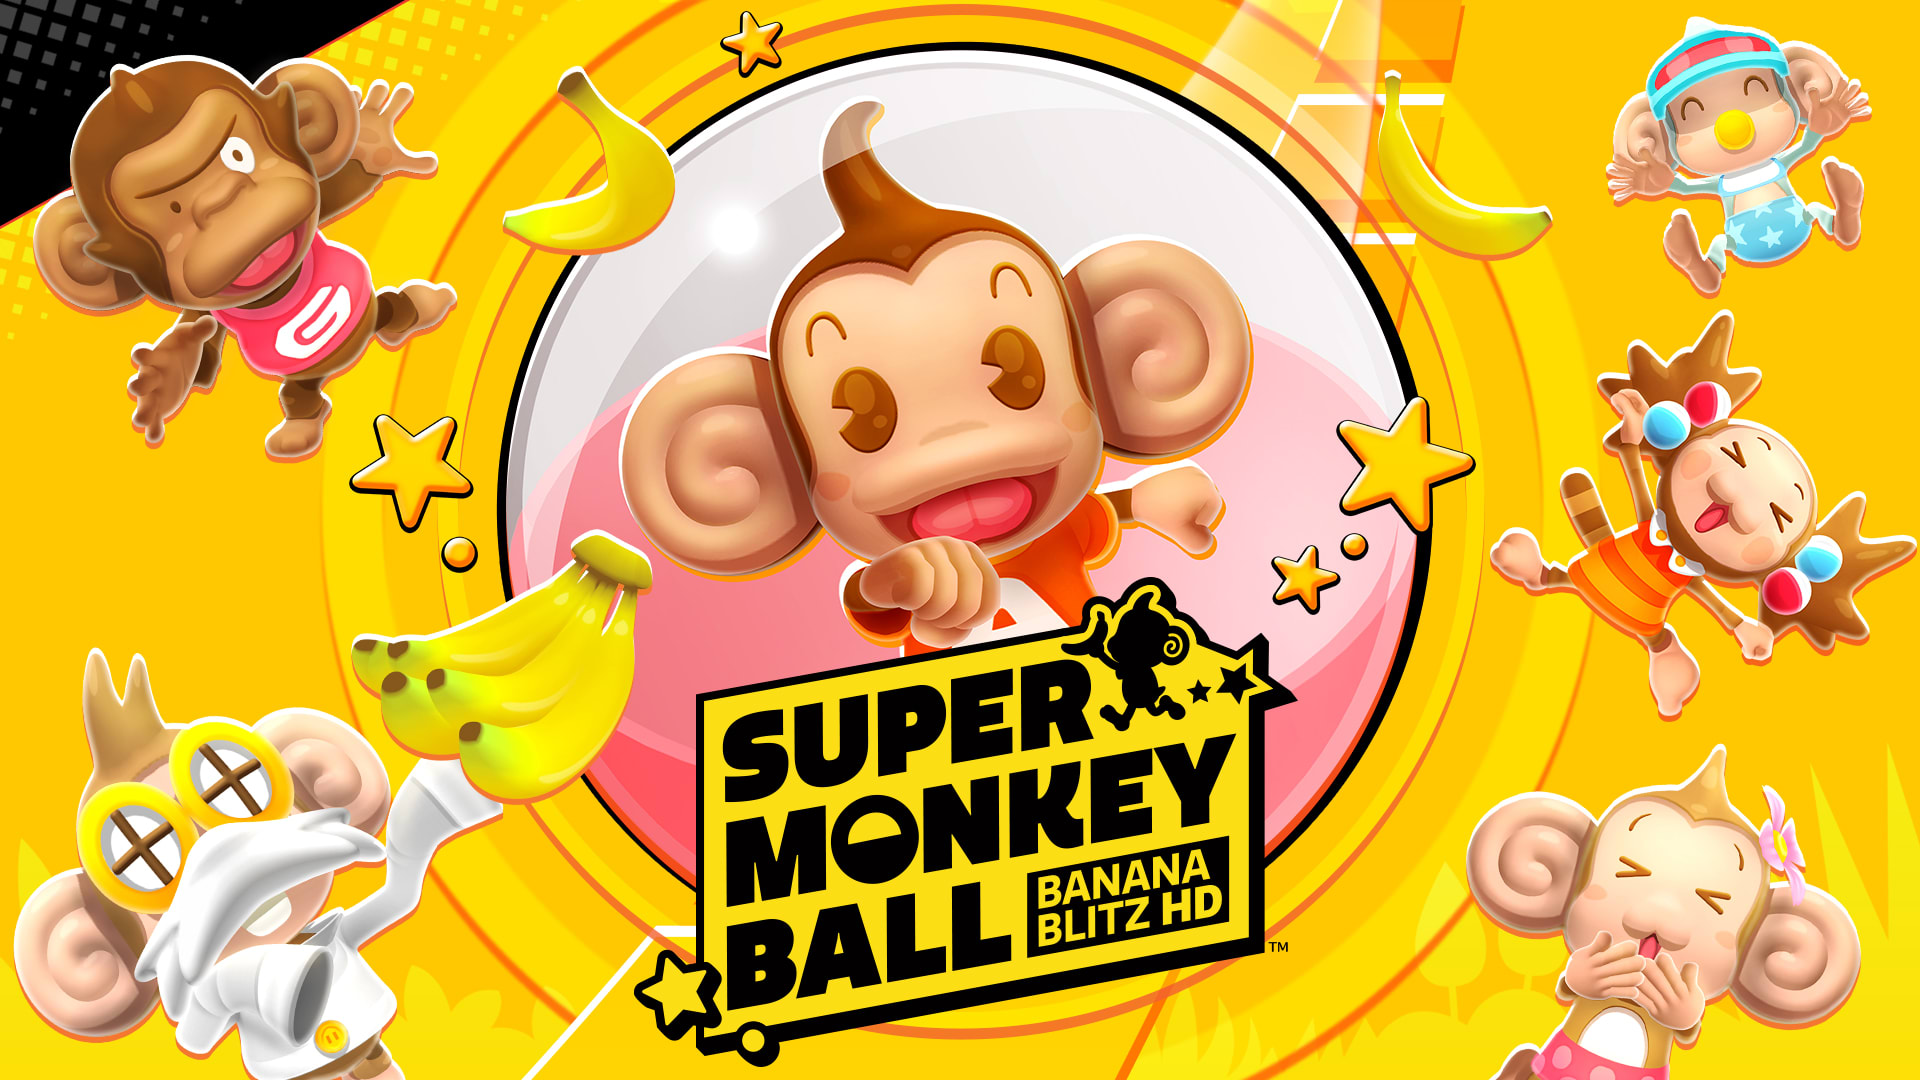 Super Monkey Ball: Banana Blitz HD